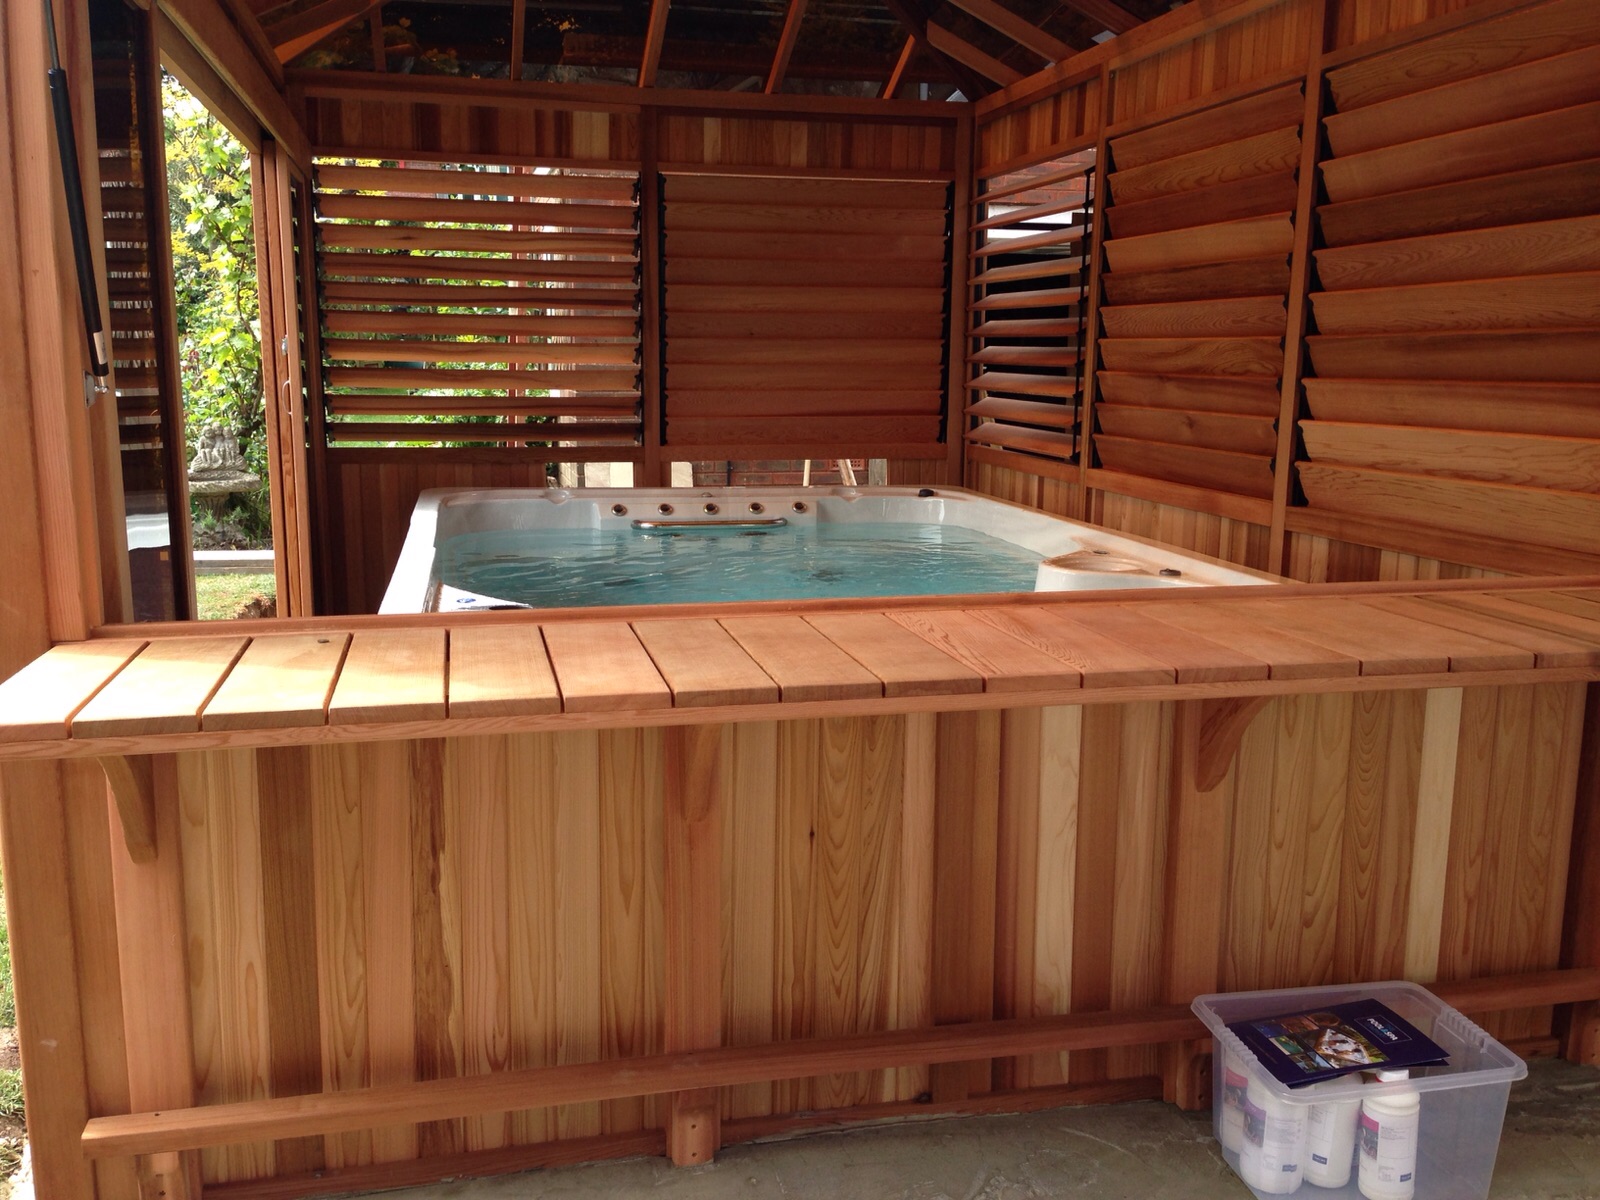 The Hot Tub and Swim Spa Company installation photo